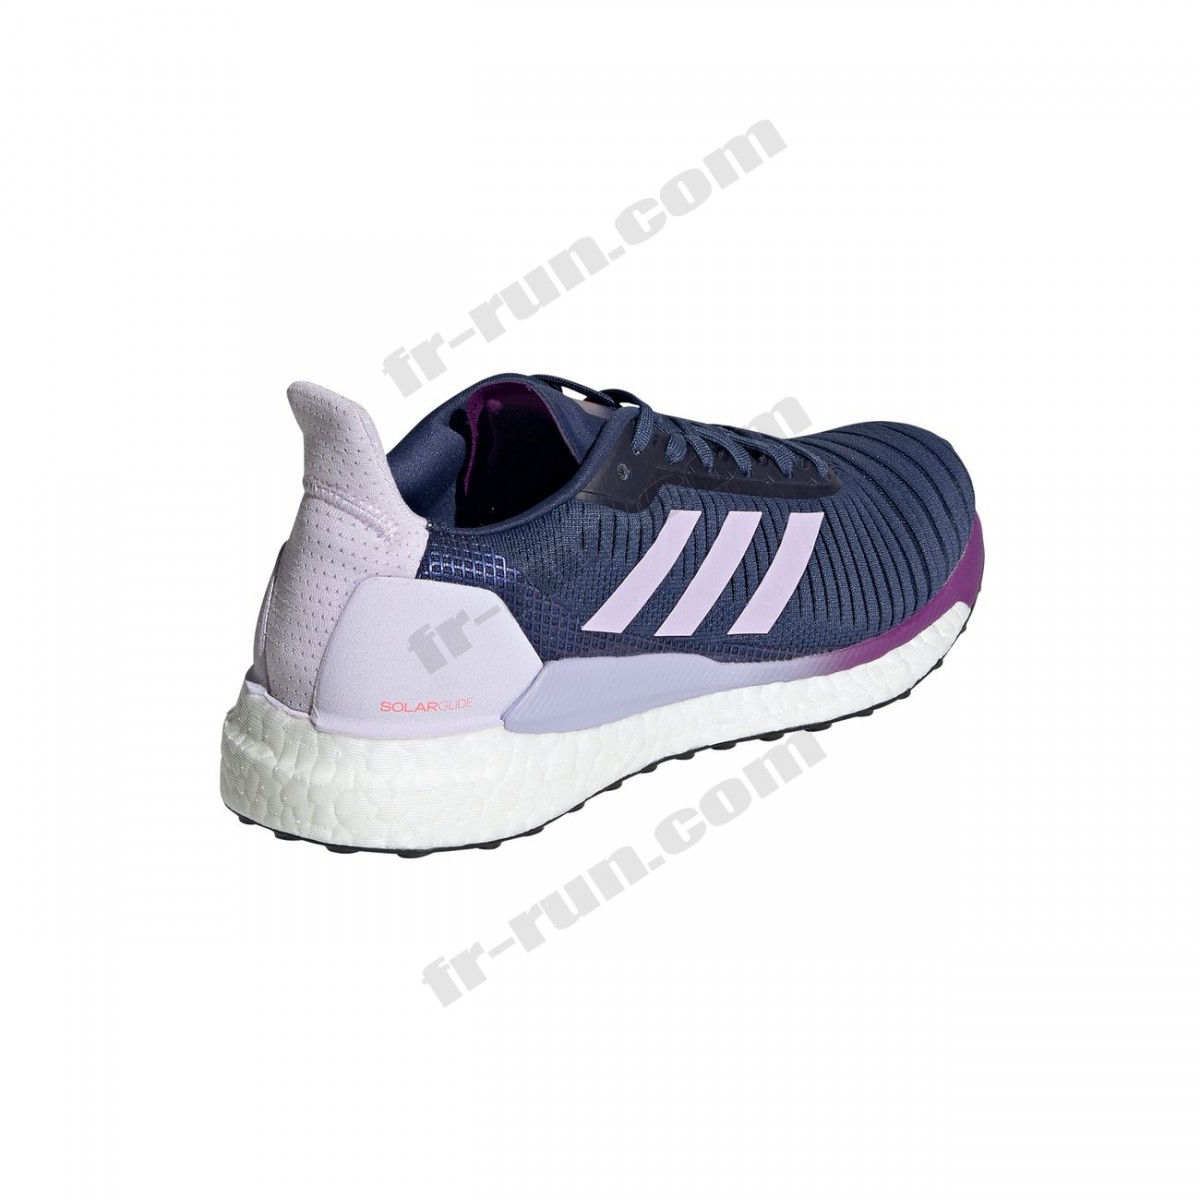 Adidas/running femme ADIDAS Adidas Solar Glide ◇◇◇ Pas Cher Du Tout - -10